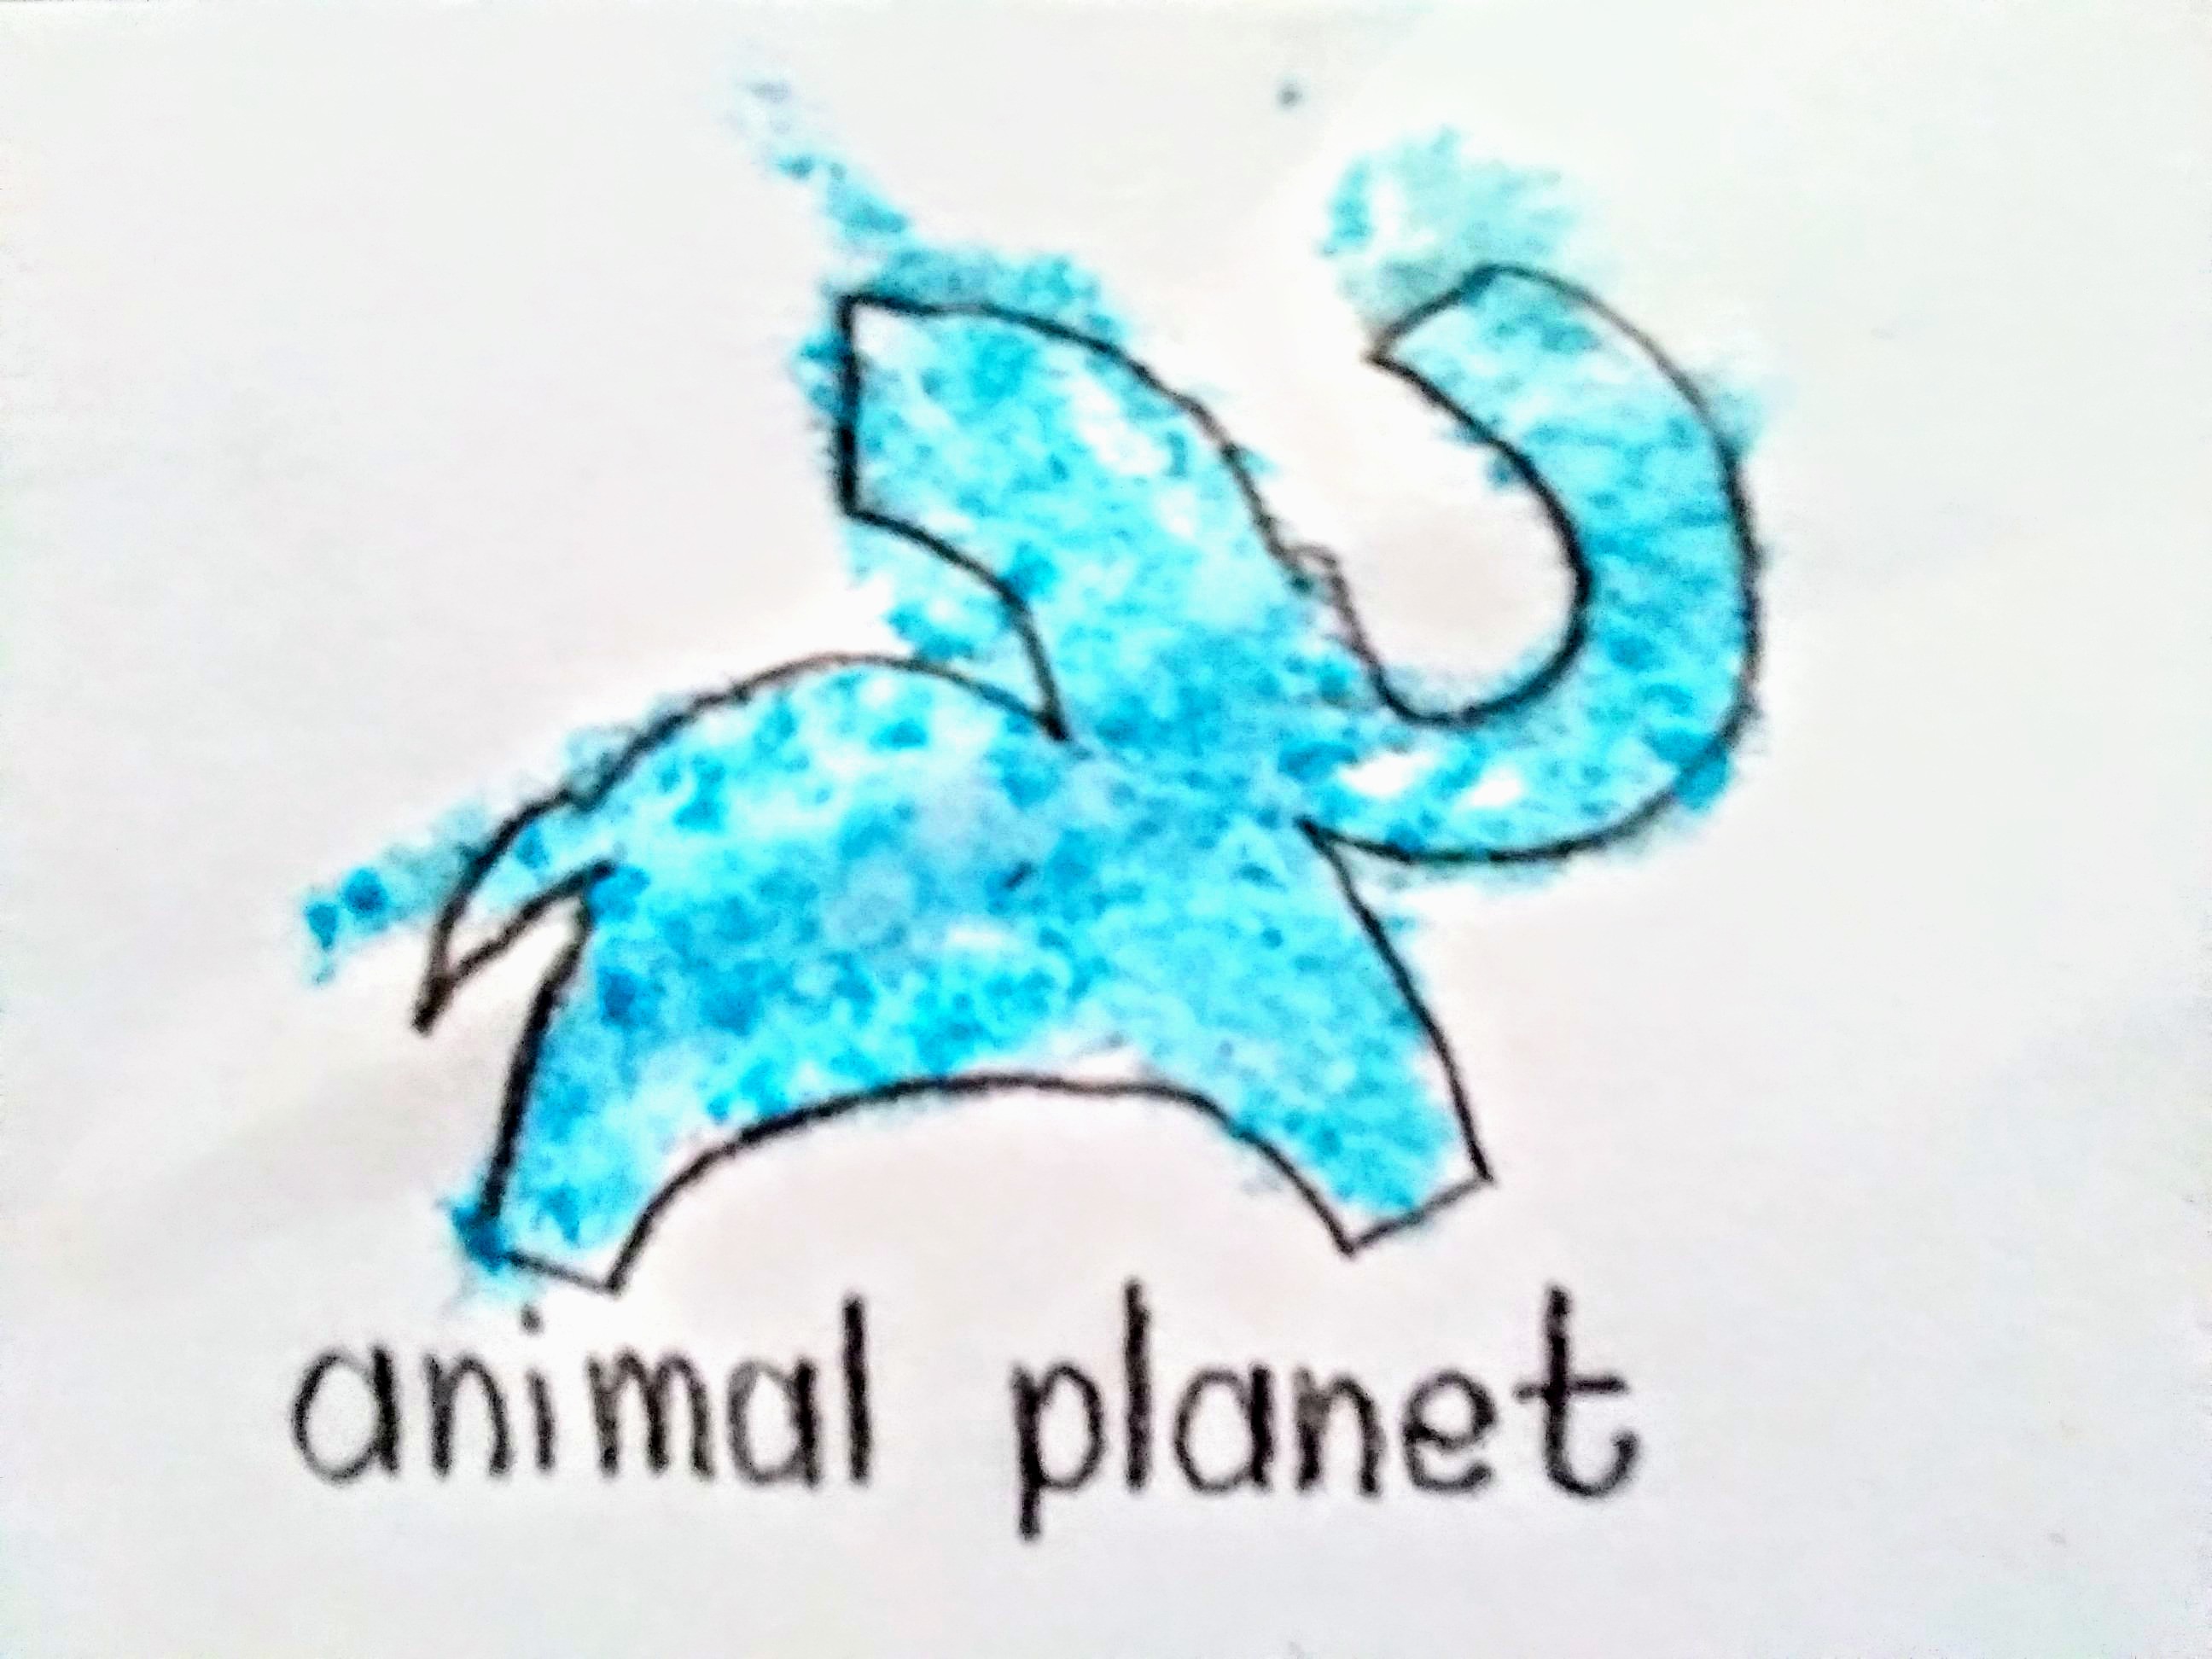 The 2018 animal planet logo by MJEGameandComicFan89 on DeviantArt